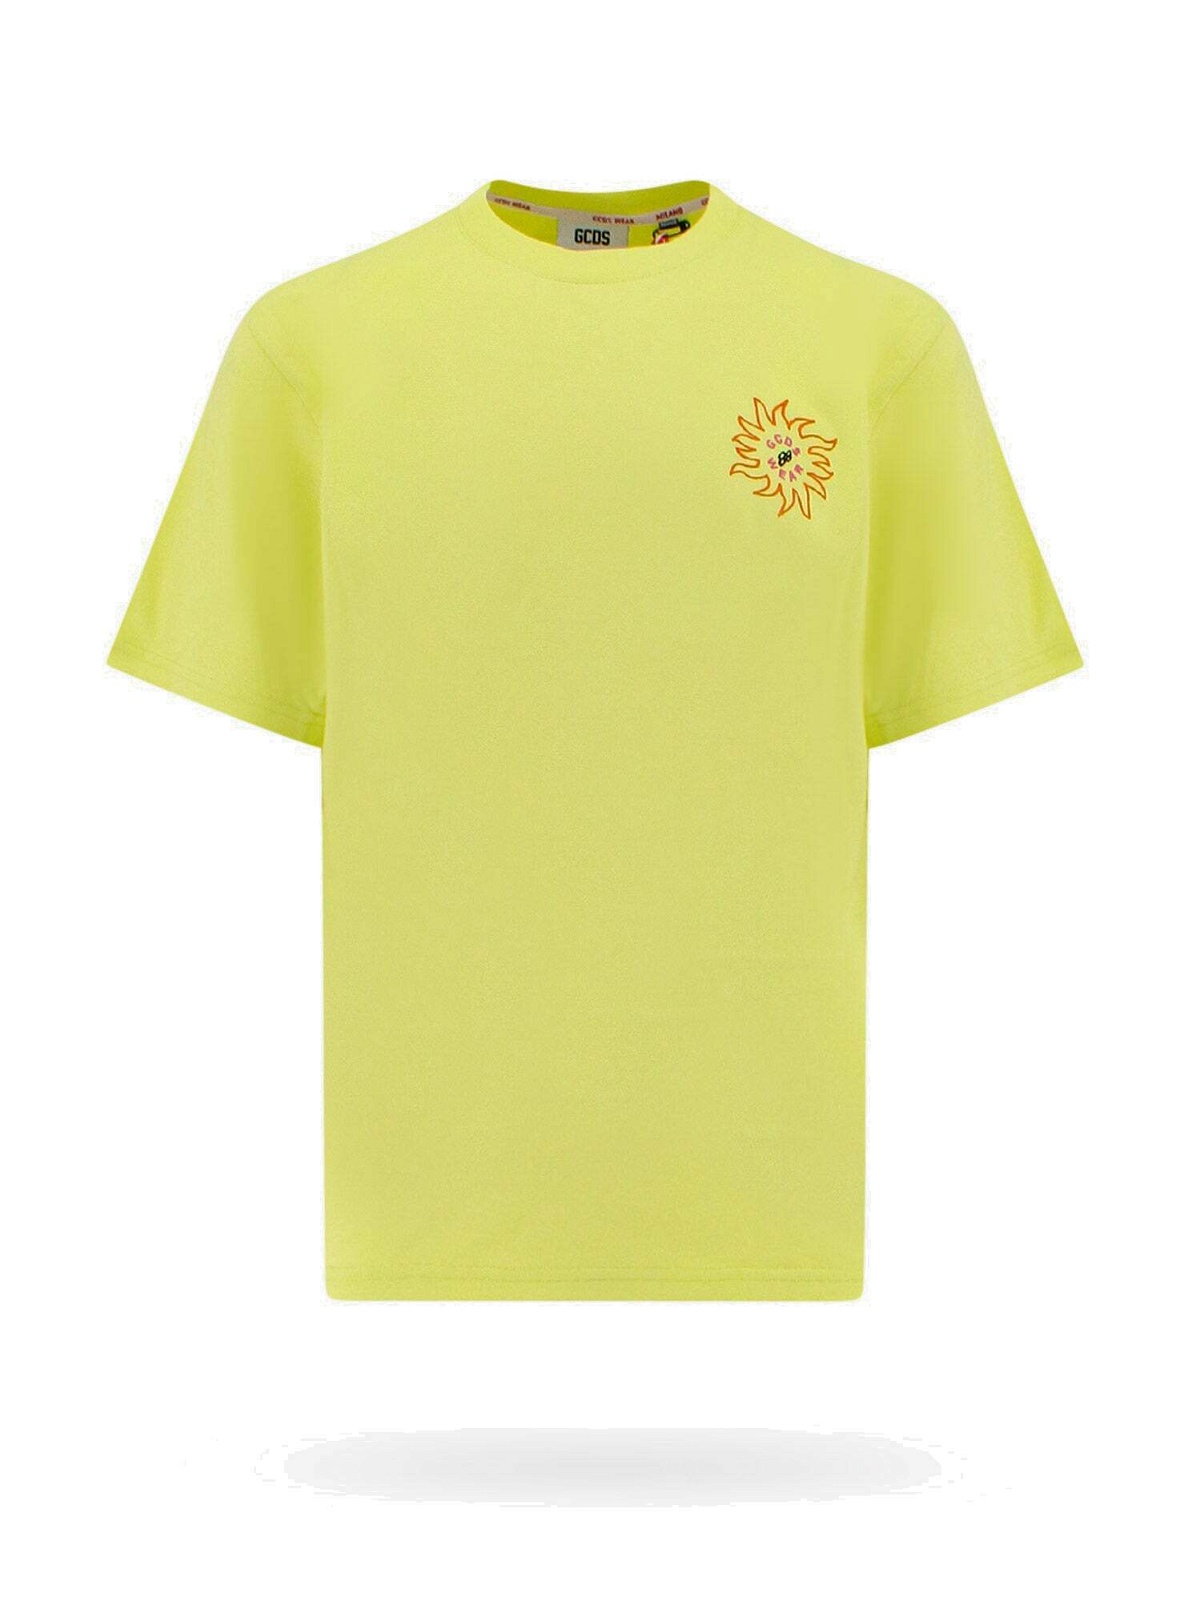 Gcds T Shirt Yellow Mens GCDS